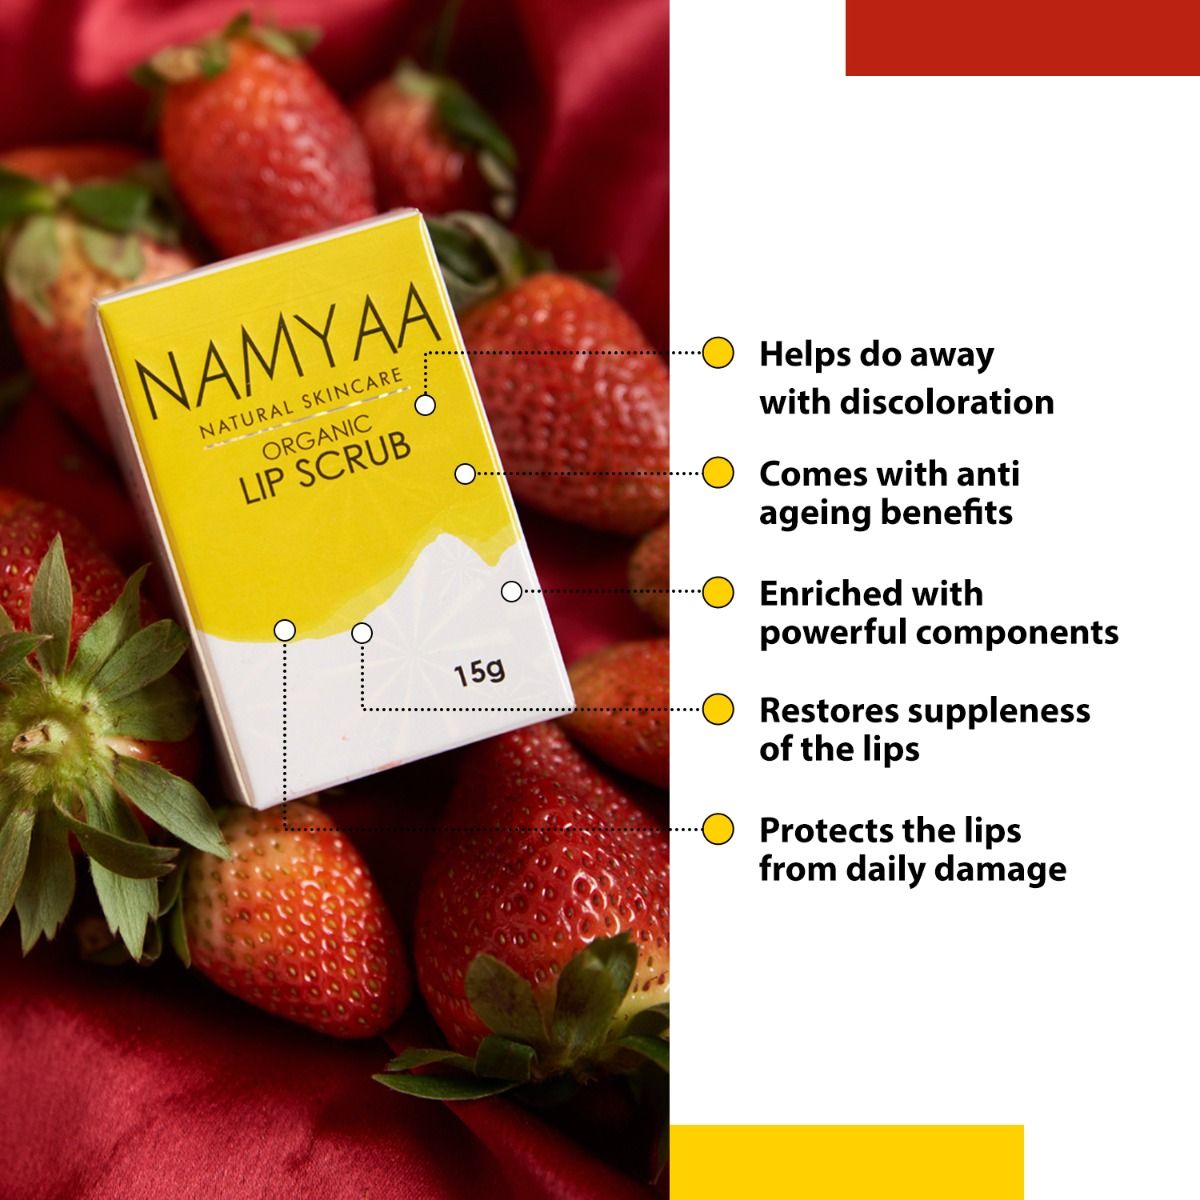 Namyaa Organic Lip Scrub, 15 gm, Pack of 1 